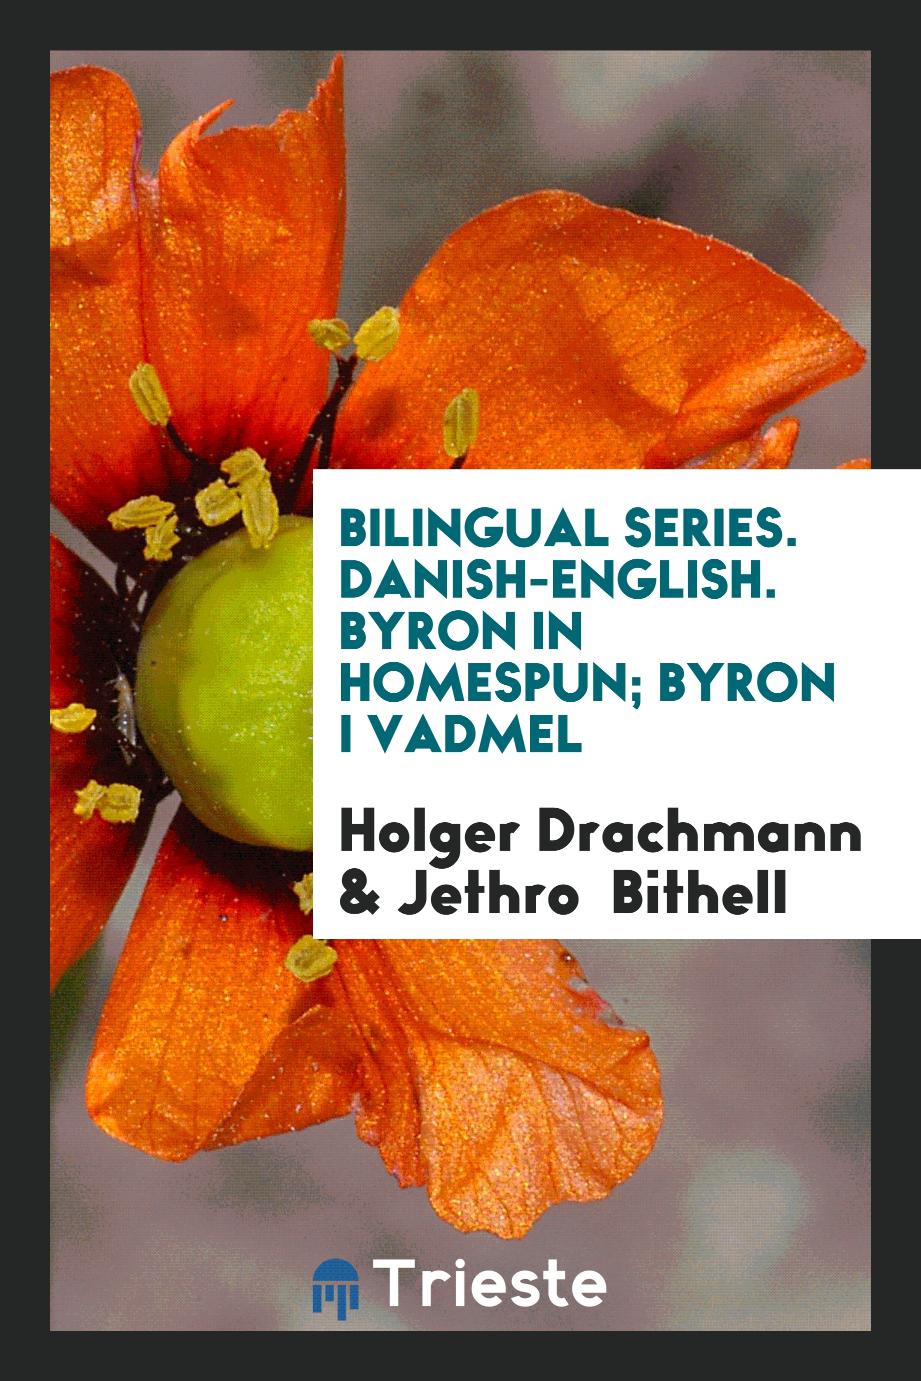 Bilingual series. Danish-English. Byron in homespun; Byron i vadmel